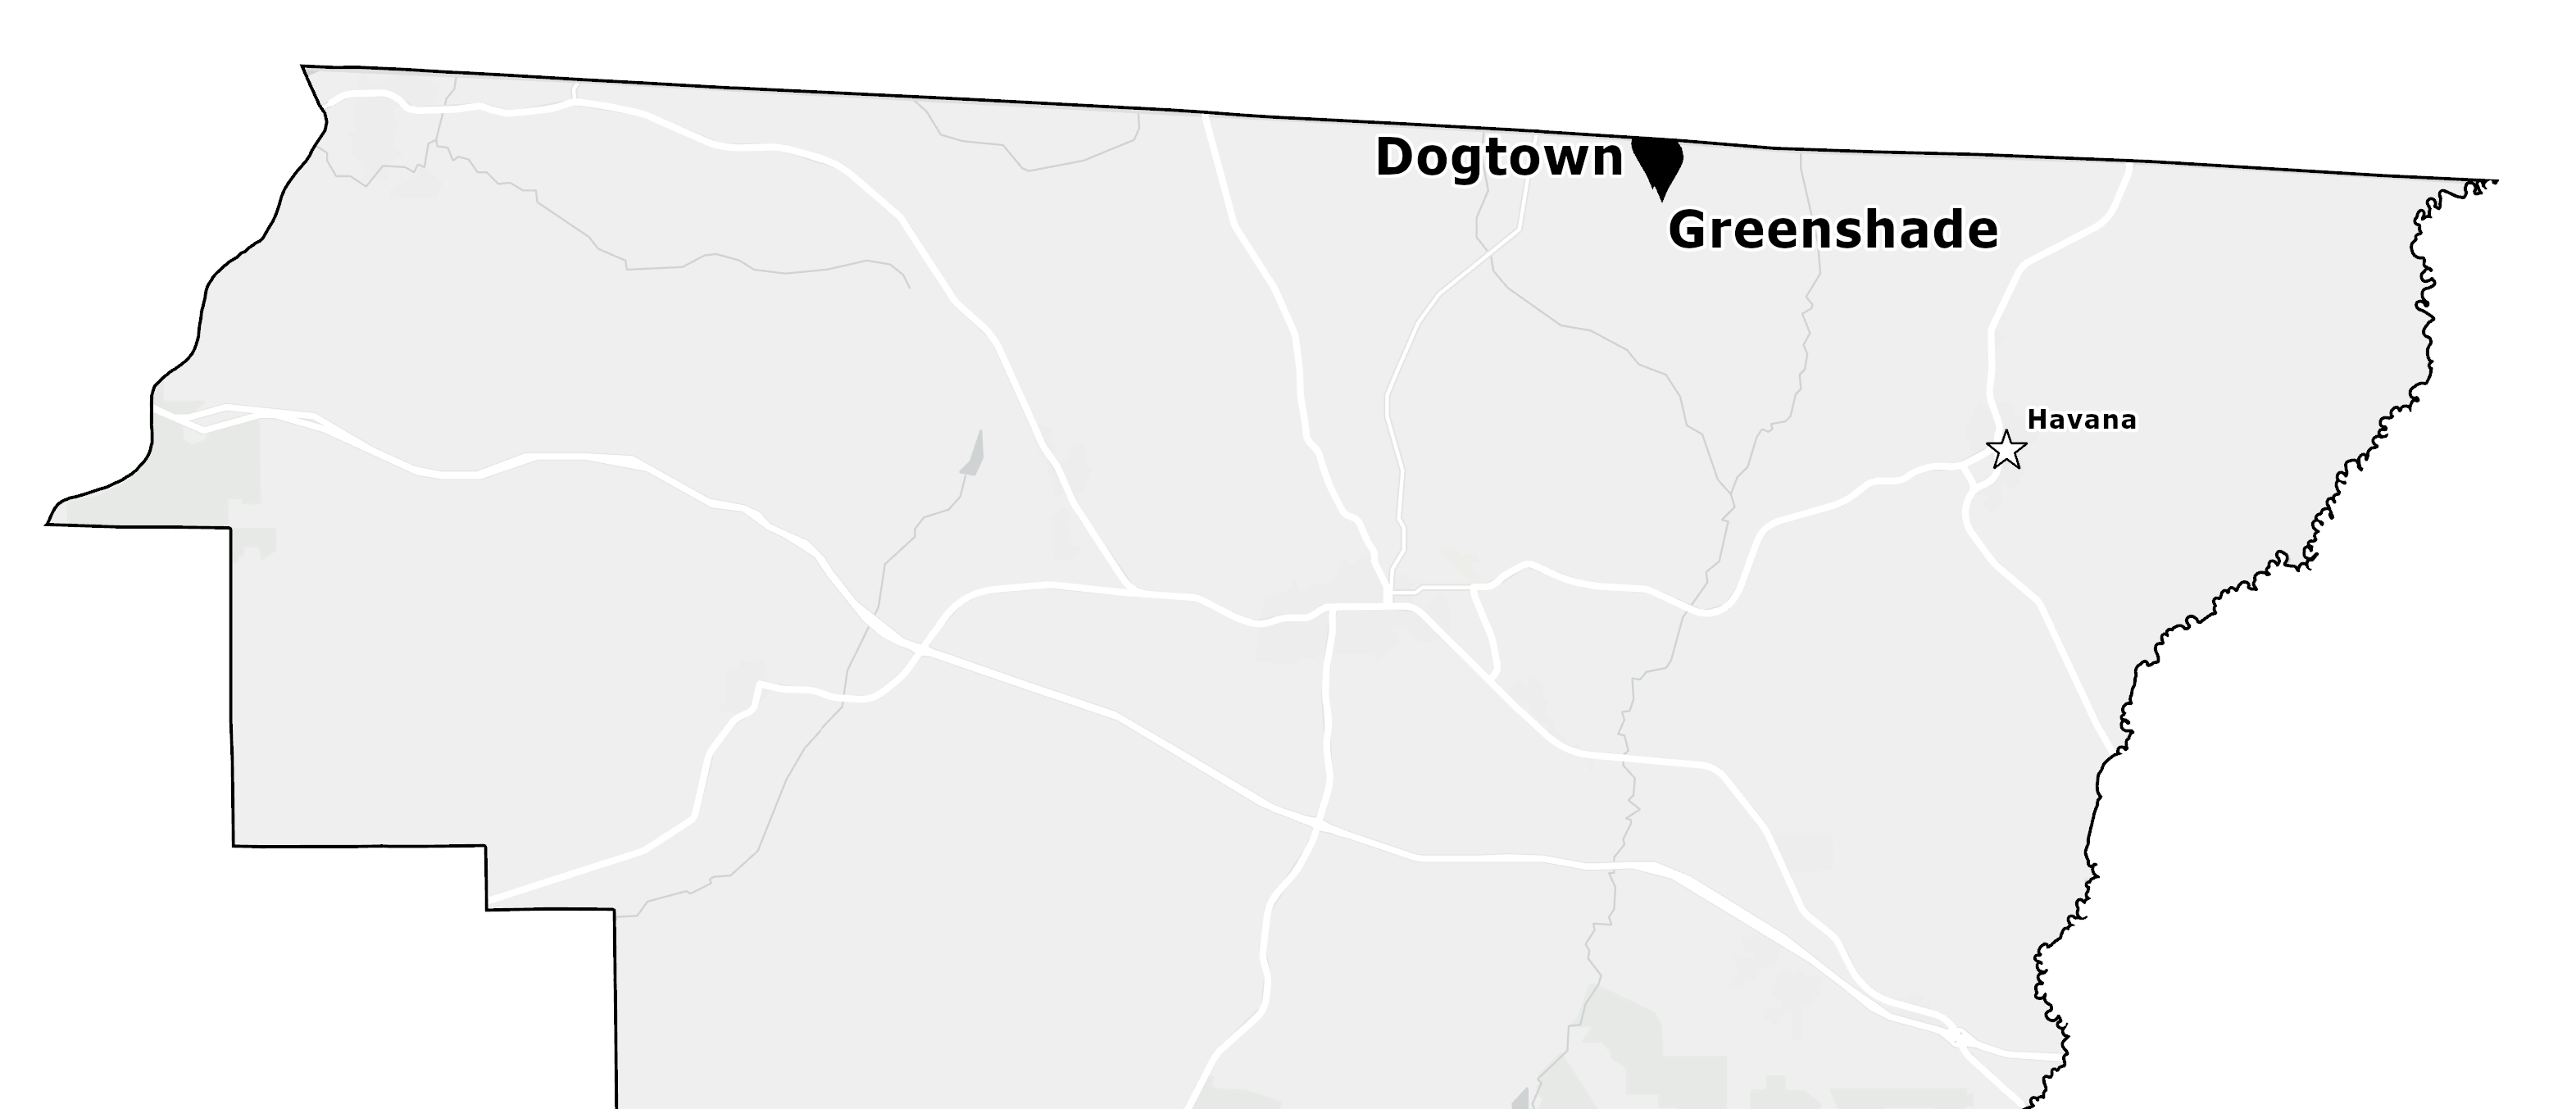 Map of Greenshade-Dogtown